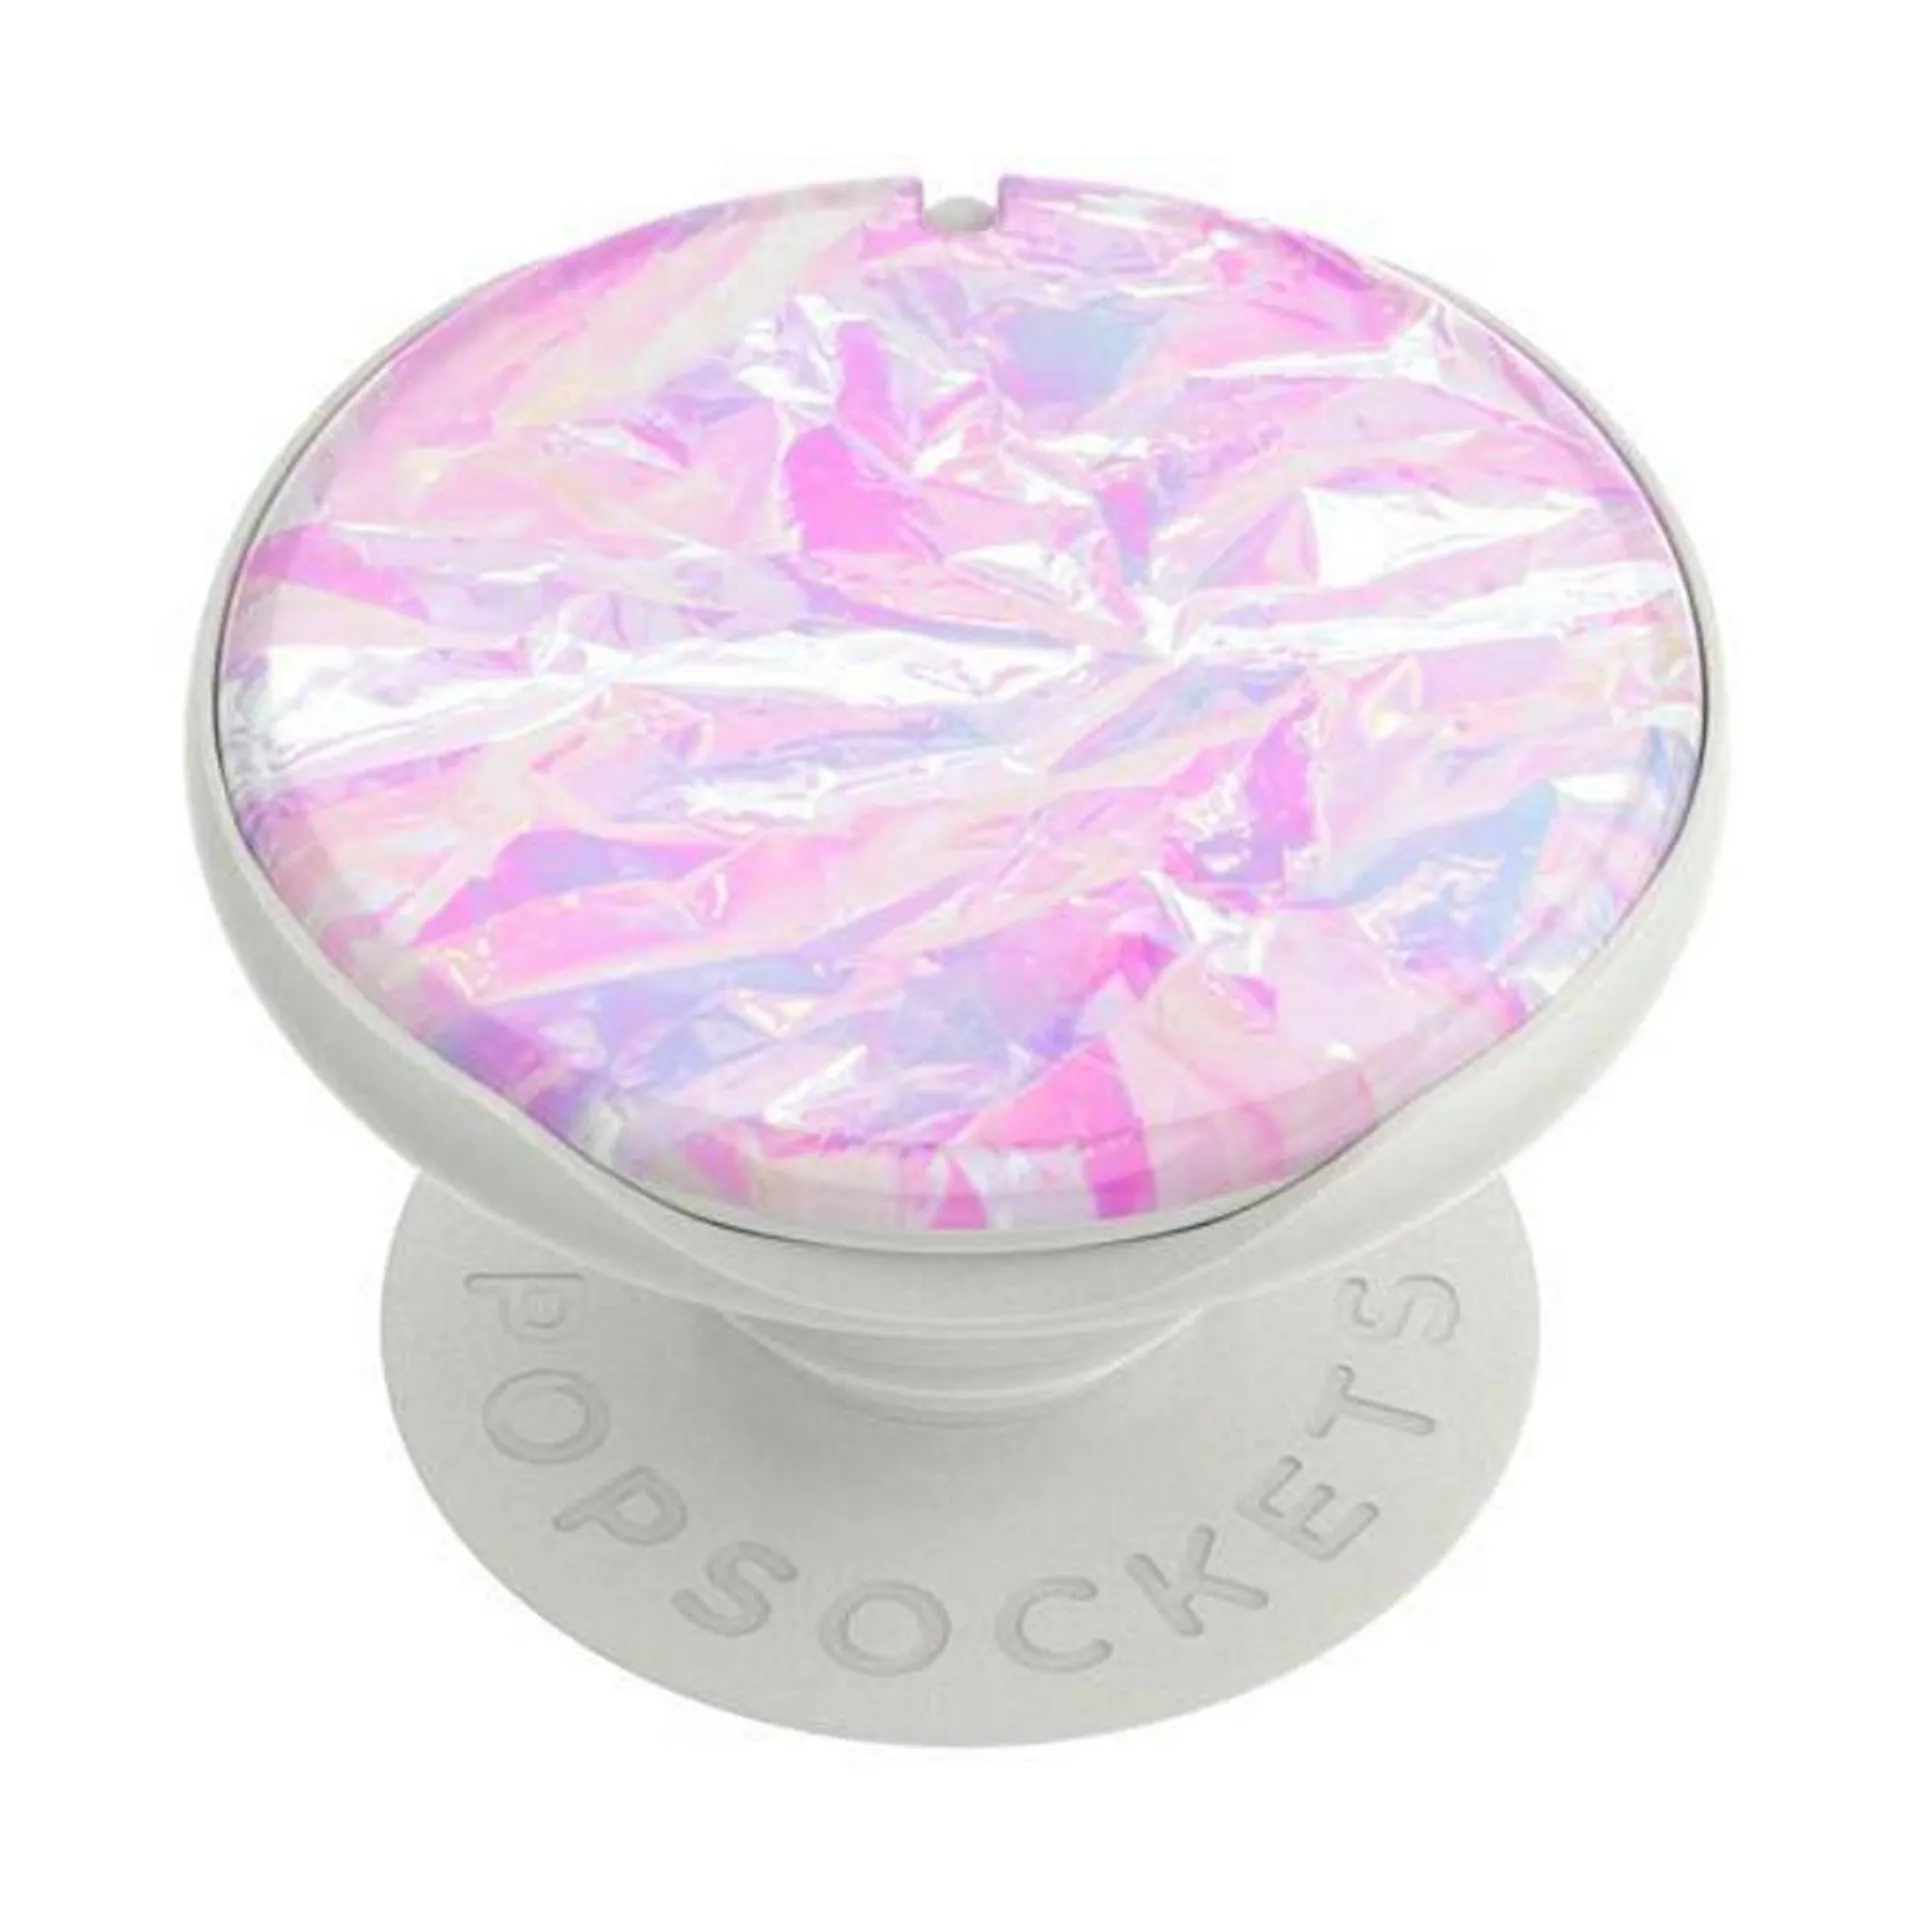 Sunrise Opal Gloss pop socket